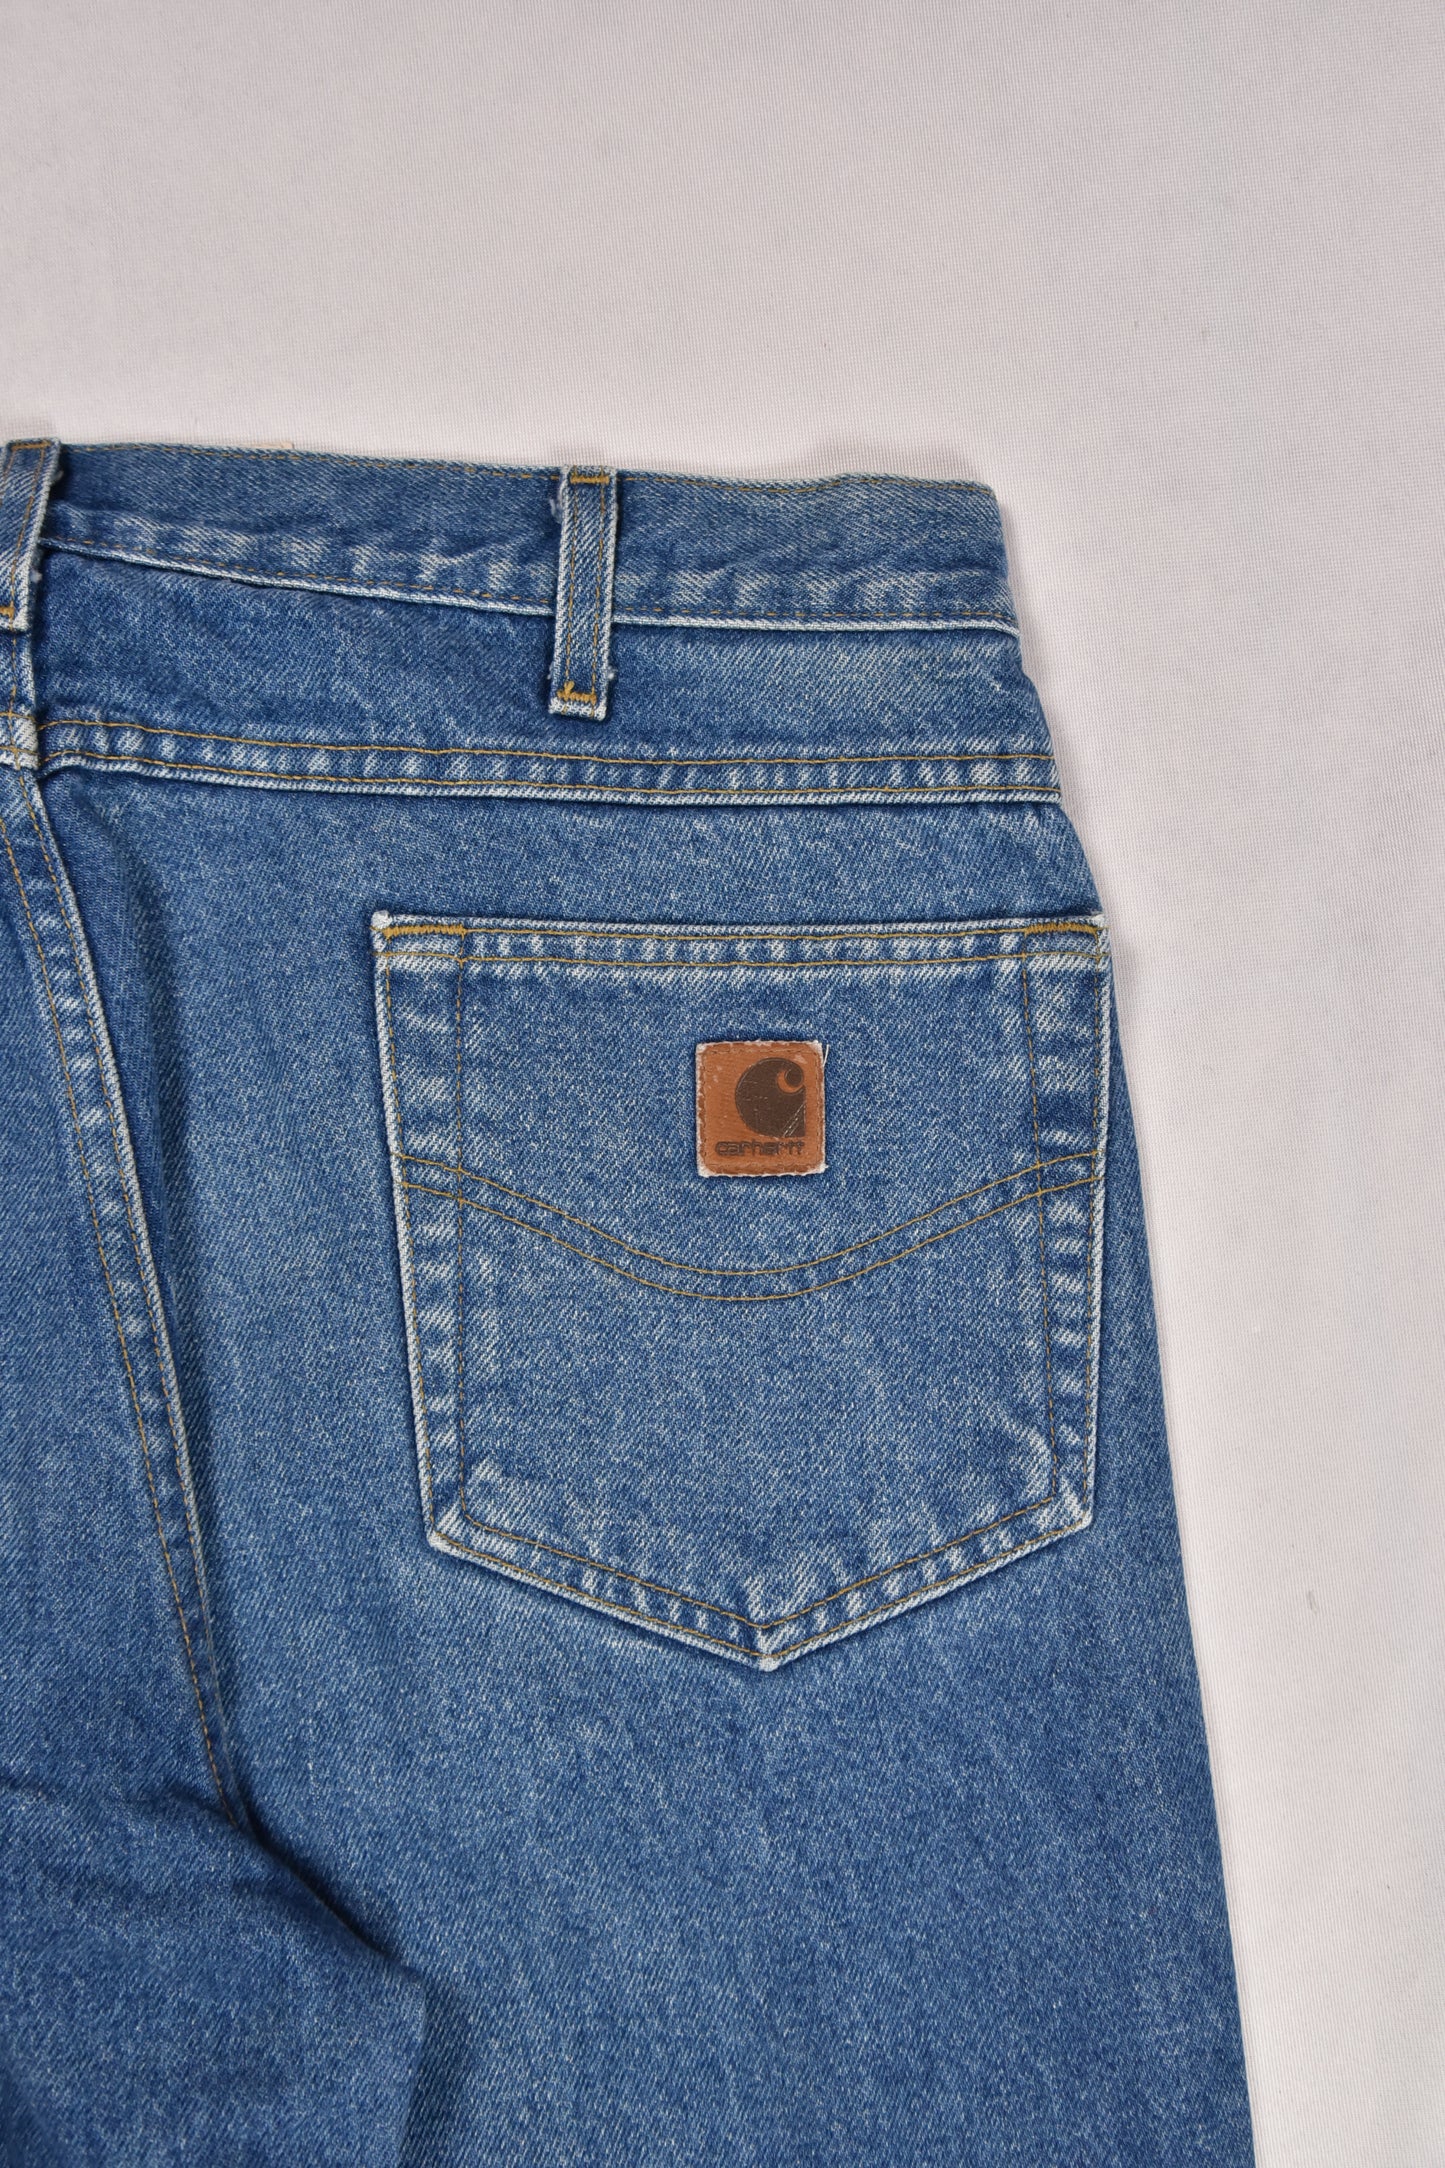 Carhartt Jeans Vintage / 38x30